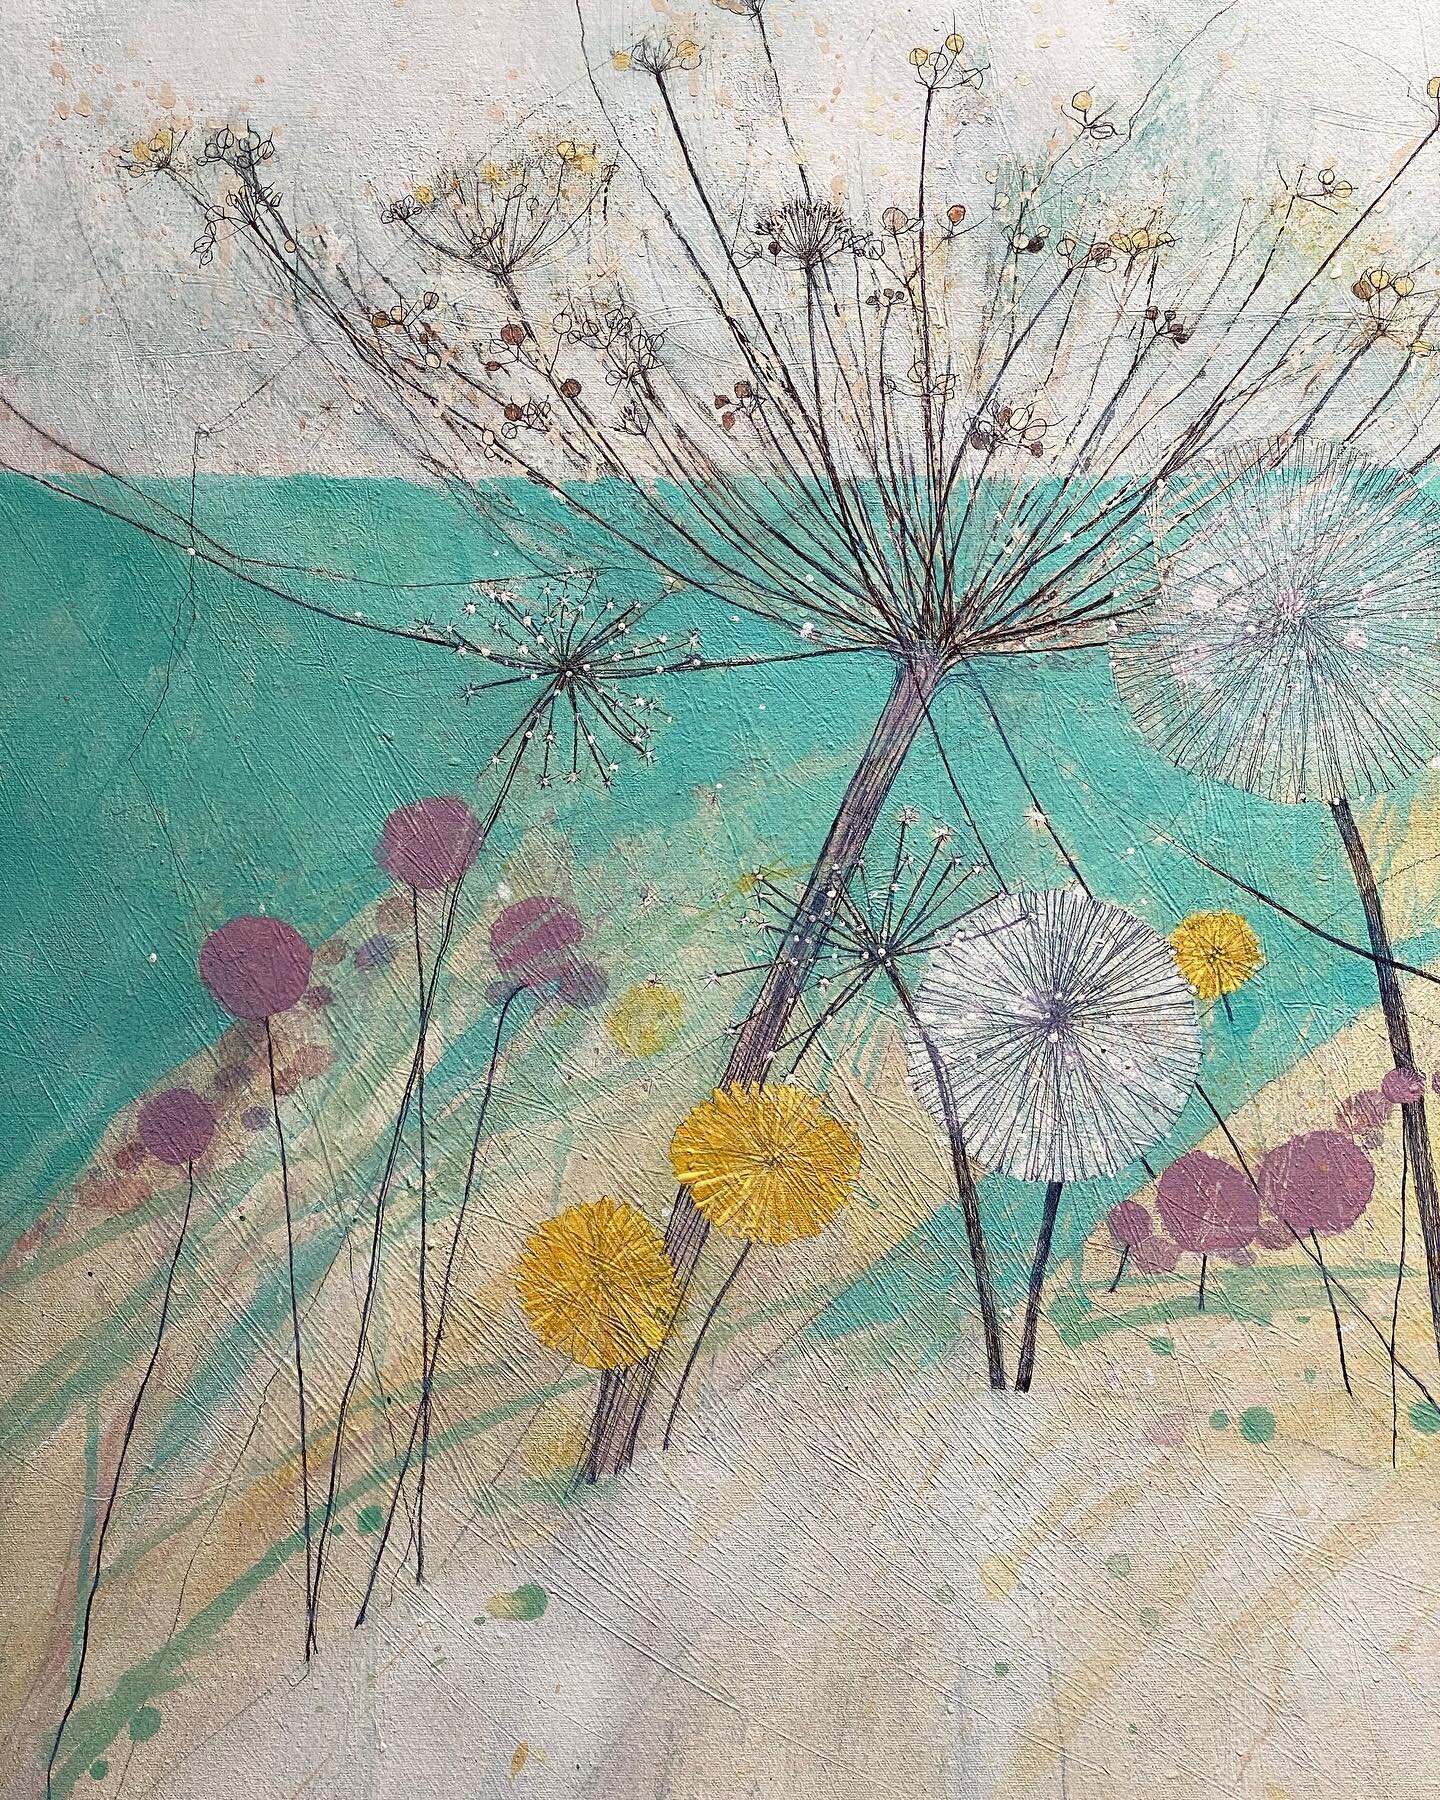 Just submitted this wild coastal painting to Penzance Studios Summer Show 🤞
@penzancestudios 
.

.
#coastalliving #wildcornwall #southwestcoastpath #seedheads #dandelionclock #seapinks #thrift #artemesia #dandelions #cornwallartist #lovecornwall #ke